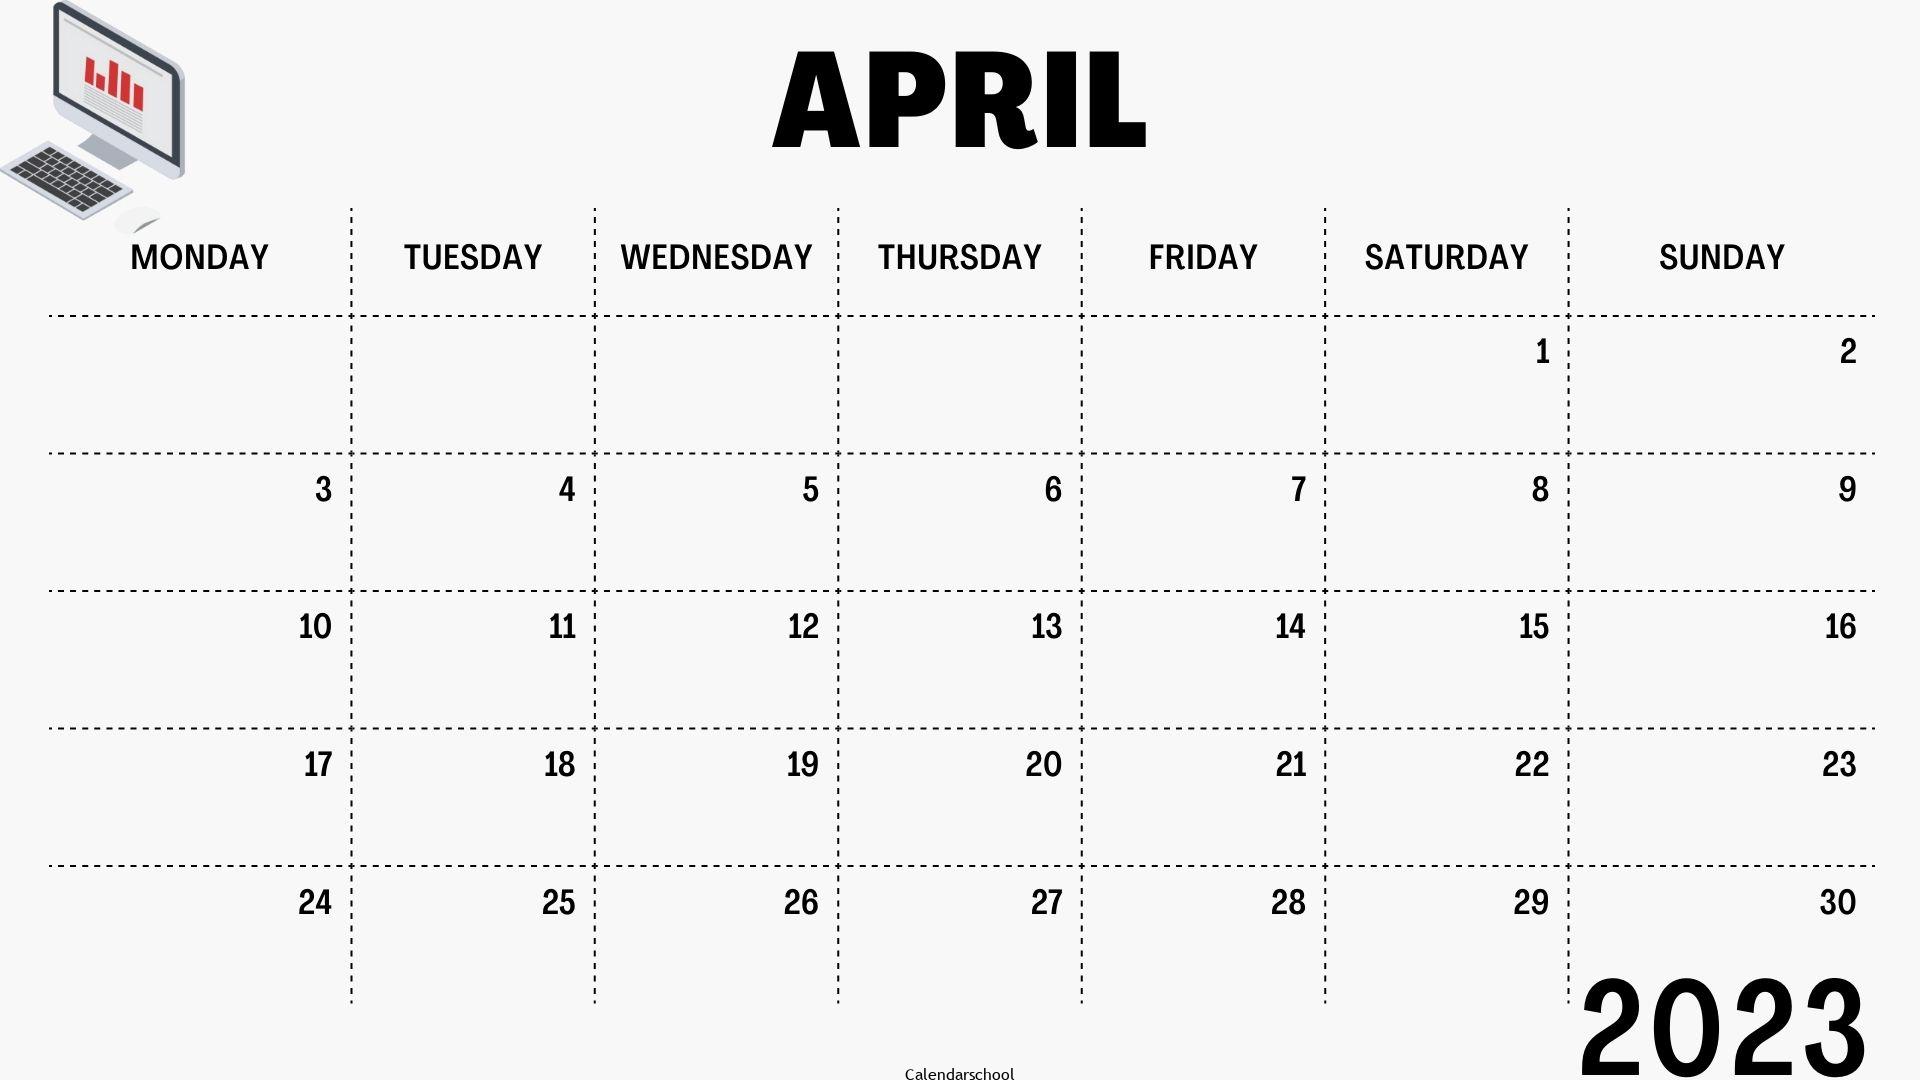 April 2023 Blank Calendar With Bank Holidays